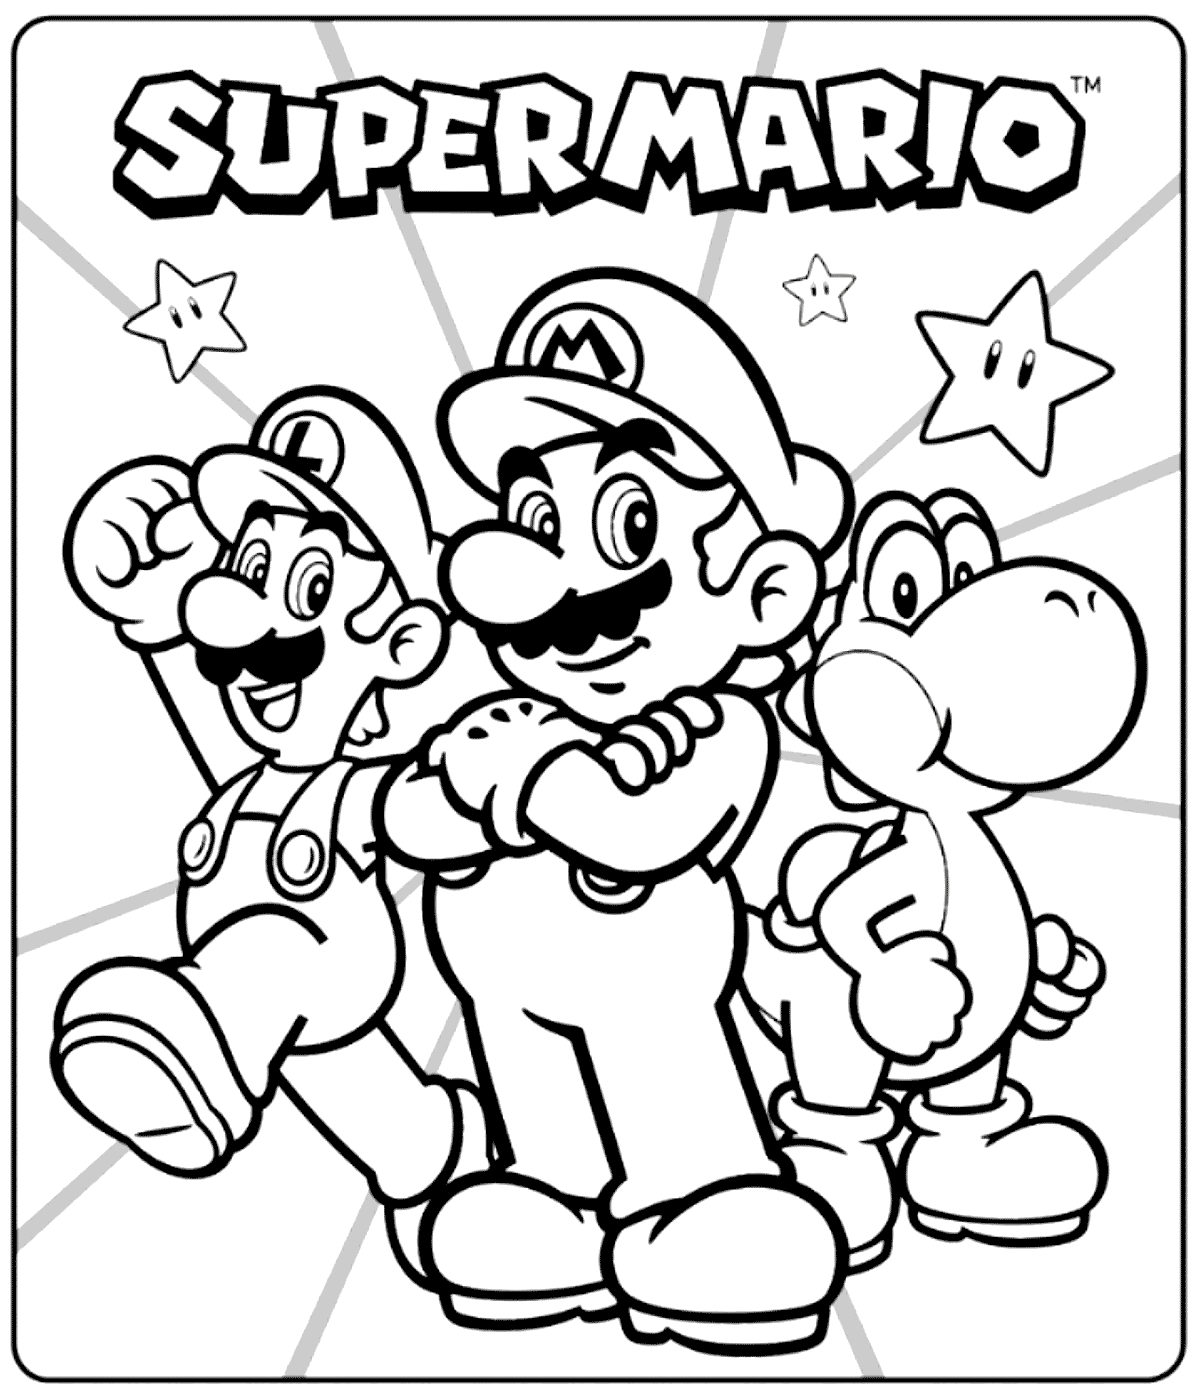 Super Mario Coloring Page - GetColoringPages.com